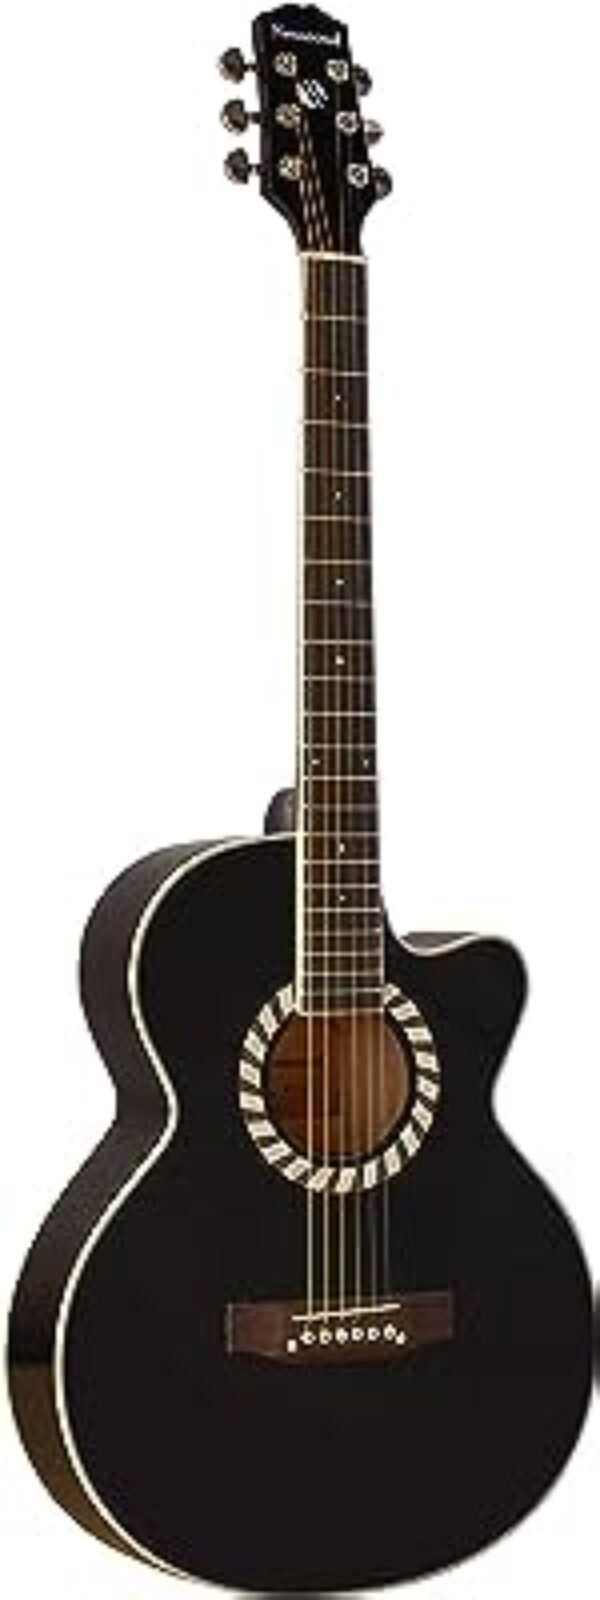 Neowood FLYM Acoustic Guitar Black